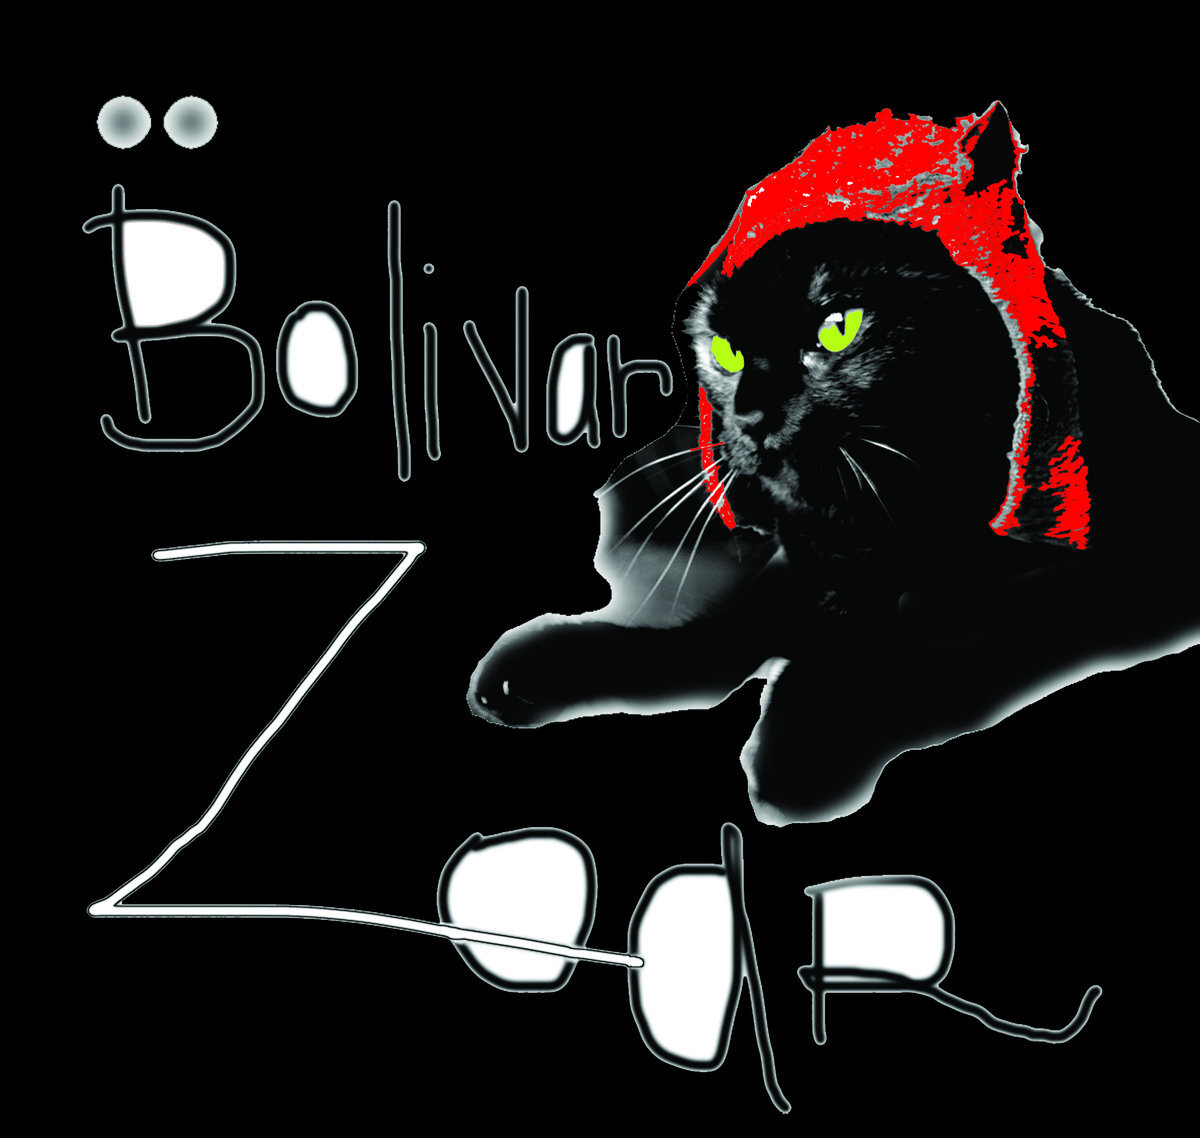 BolivarZoar.jpg